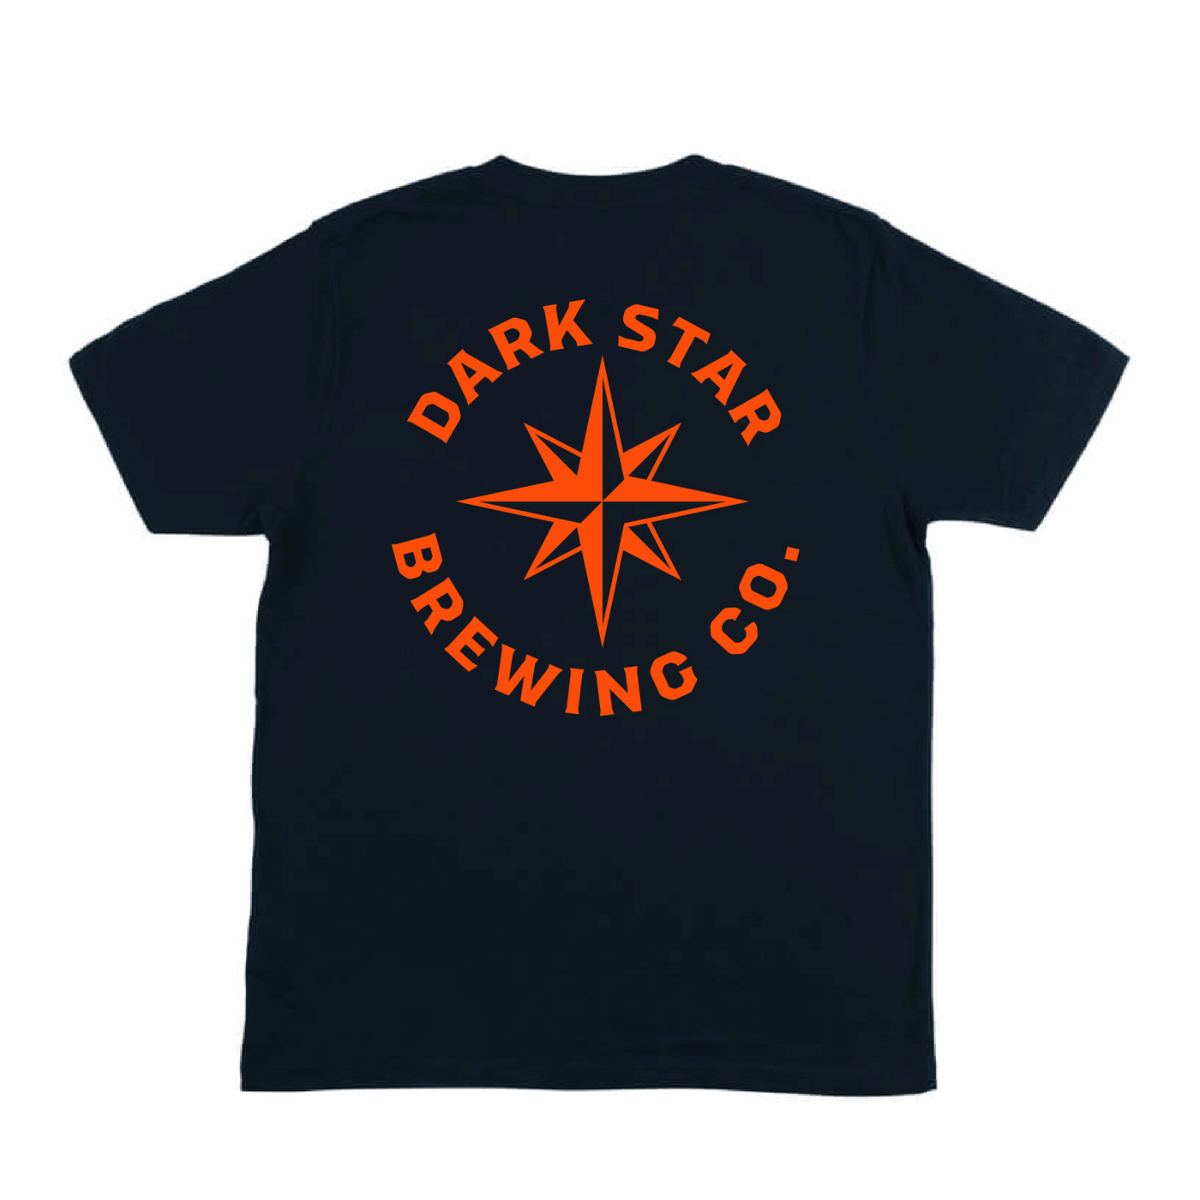 Dark Star Blue T-Shirt - Dark Star Brewing Co.